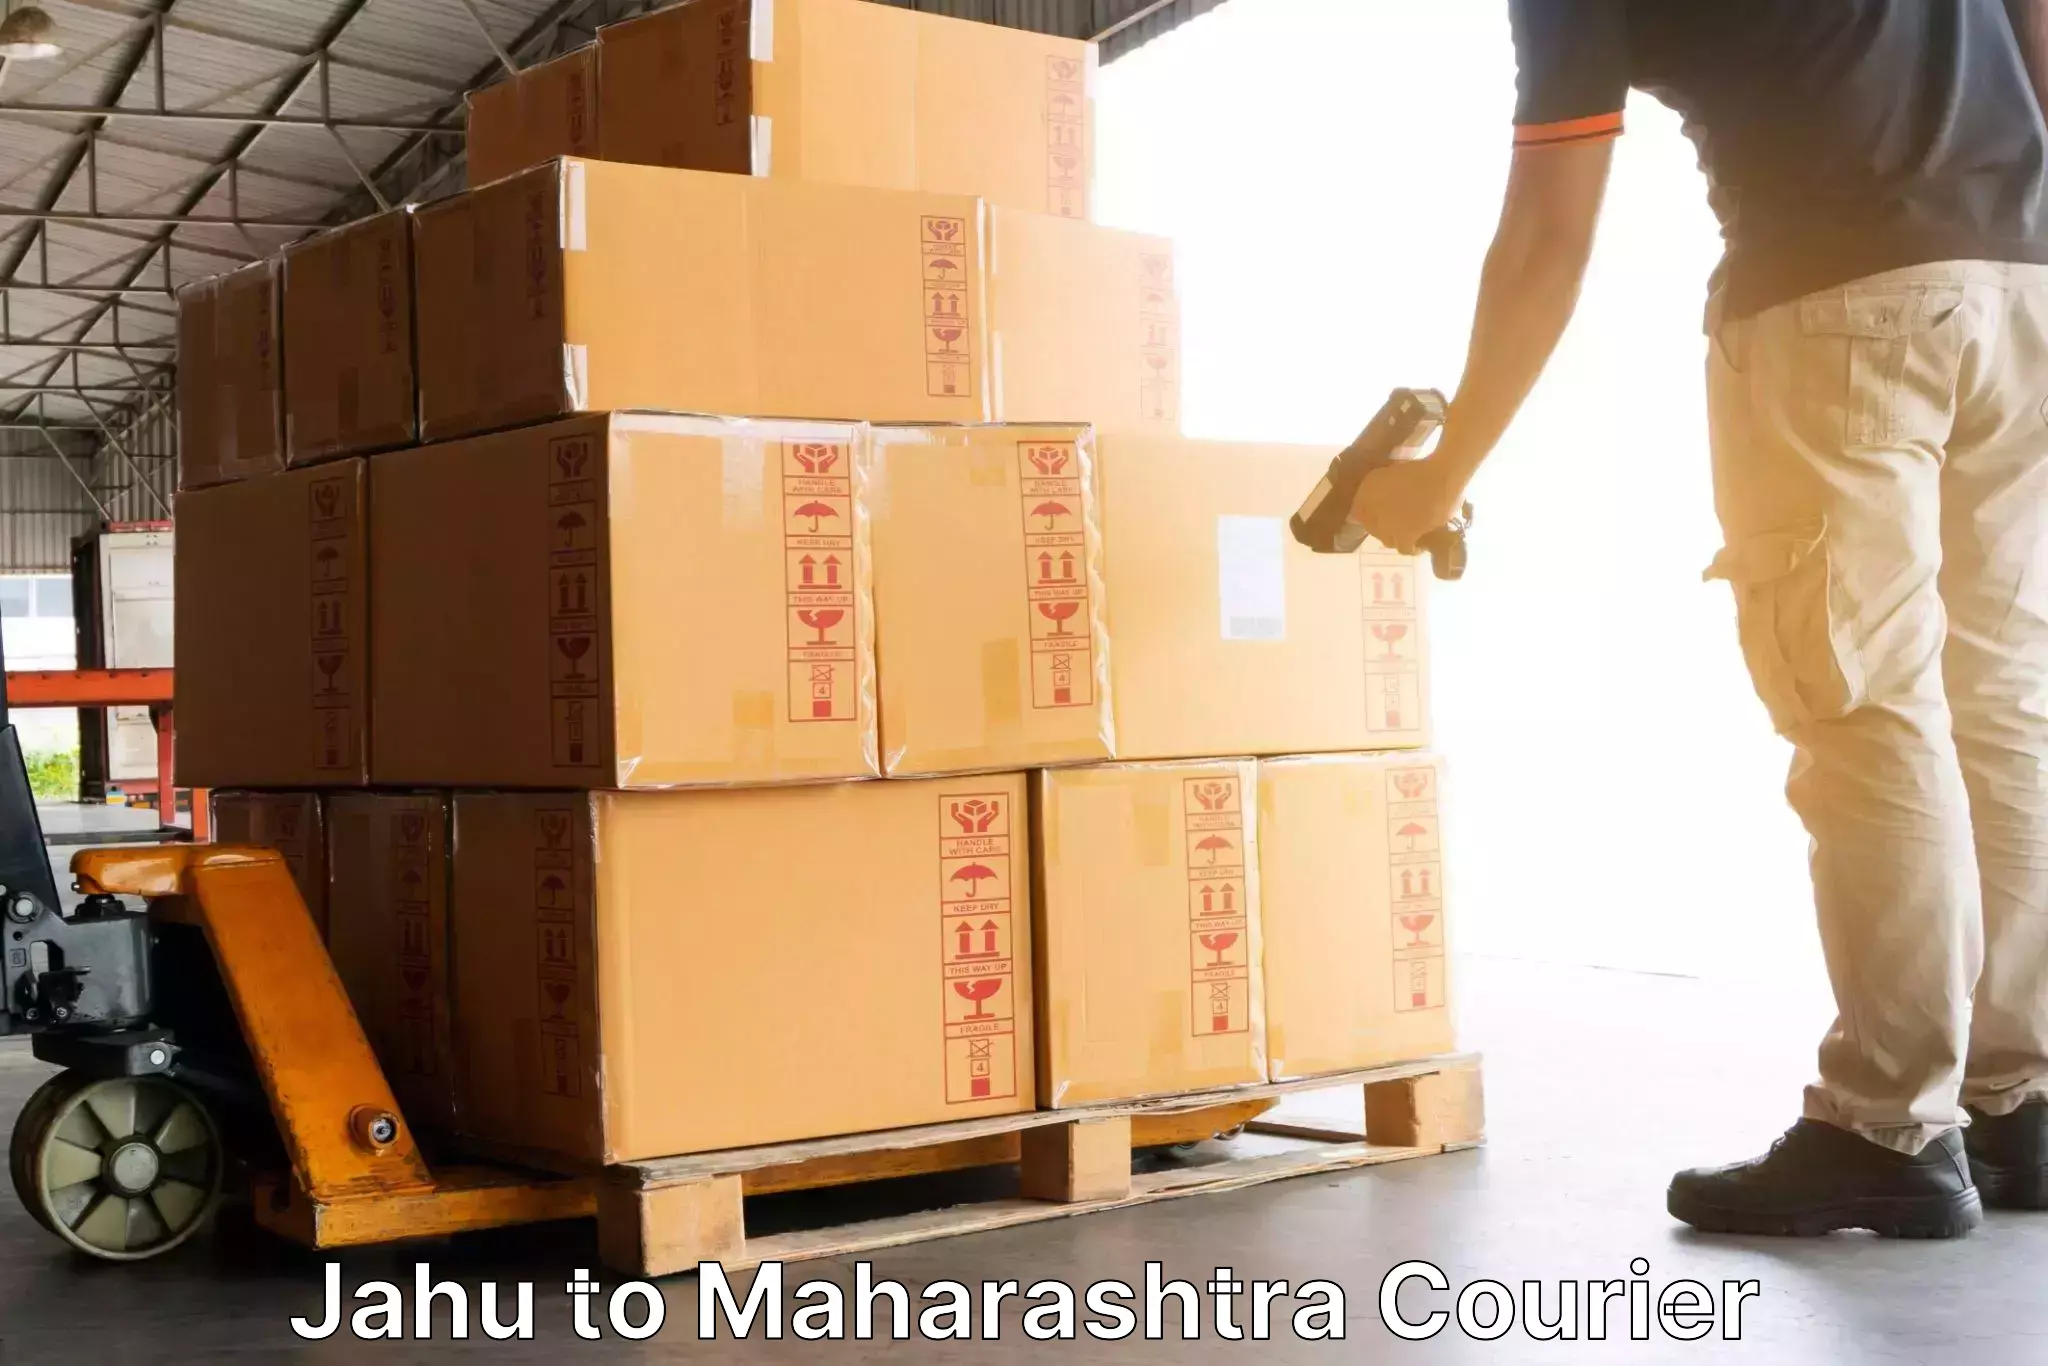 Express delivery network Jahu to Maharashtra